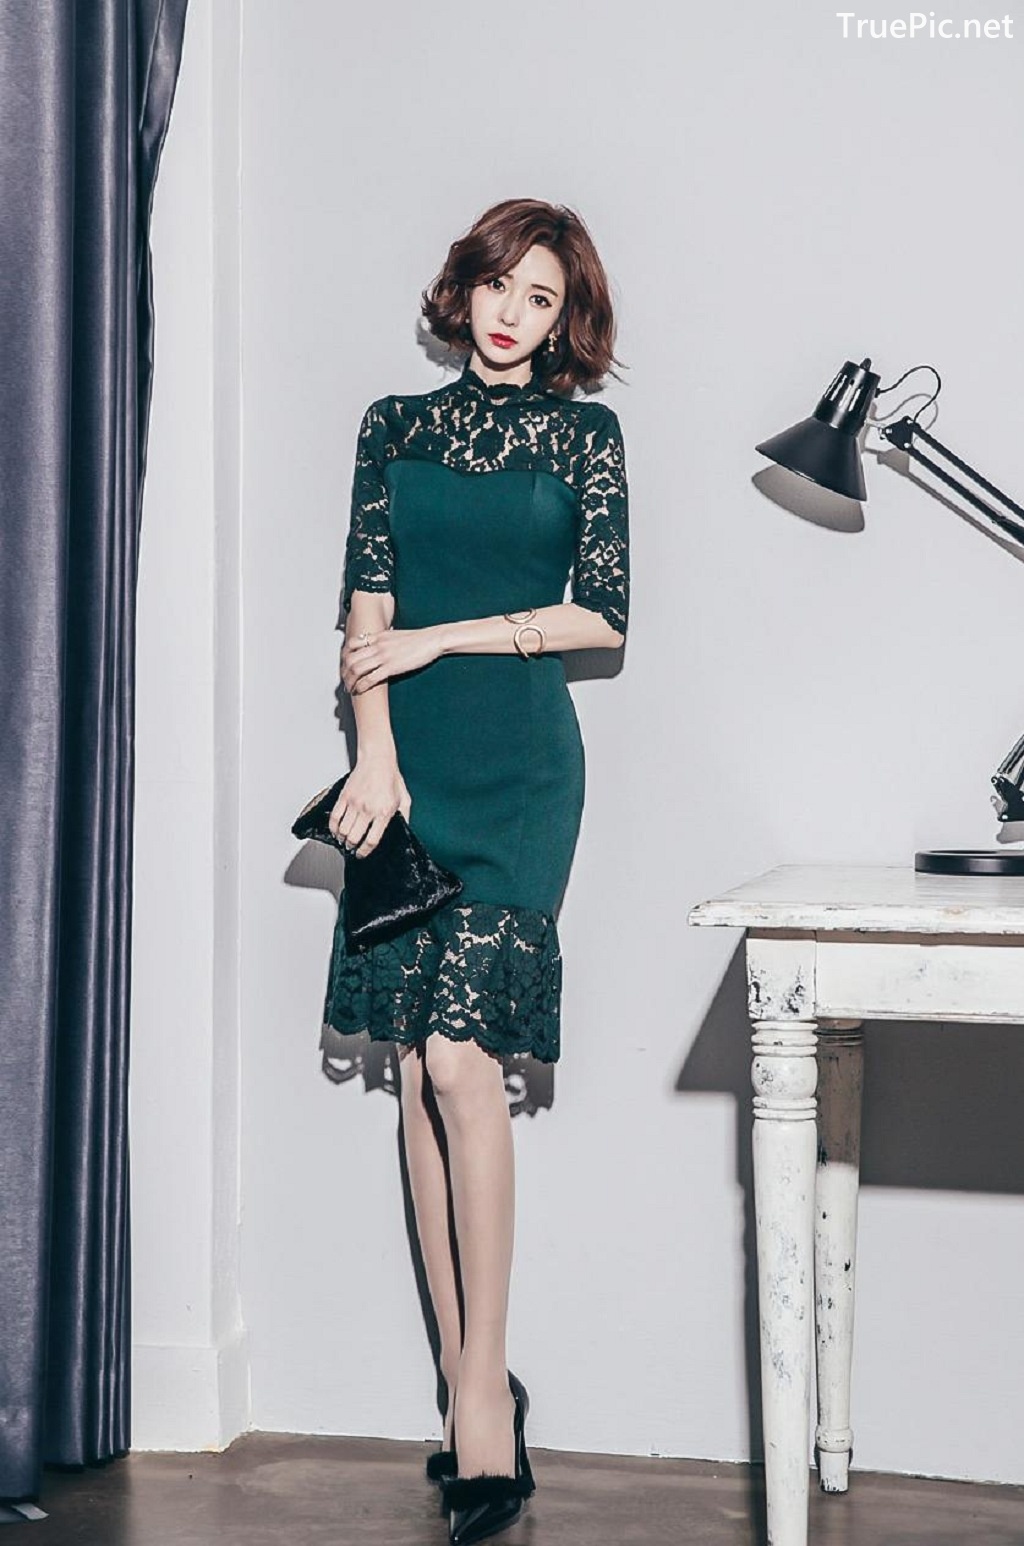 Image Ye Jin - Korean Fashion Model - Studio Photoshoot Collection - TruePic.net - Picture-36